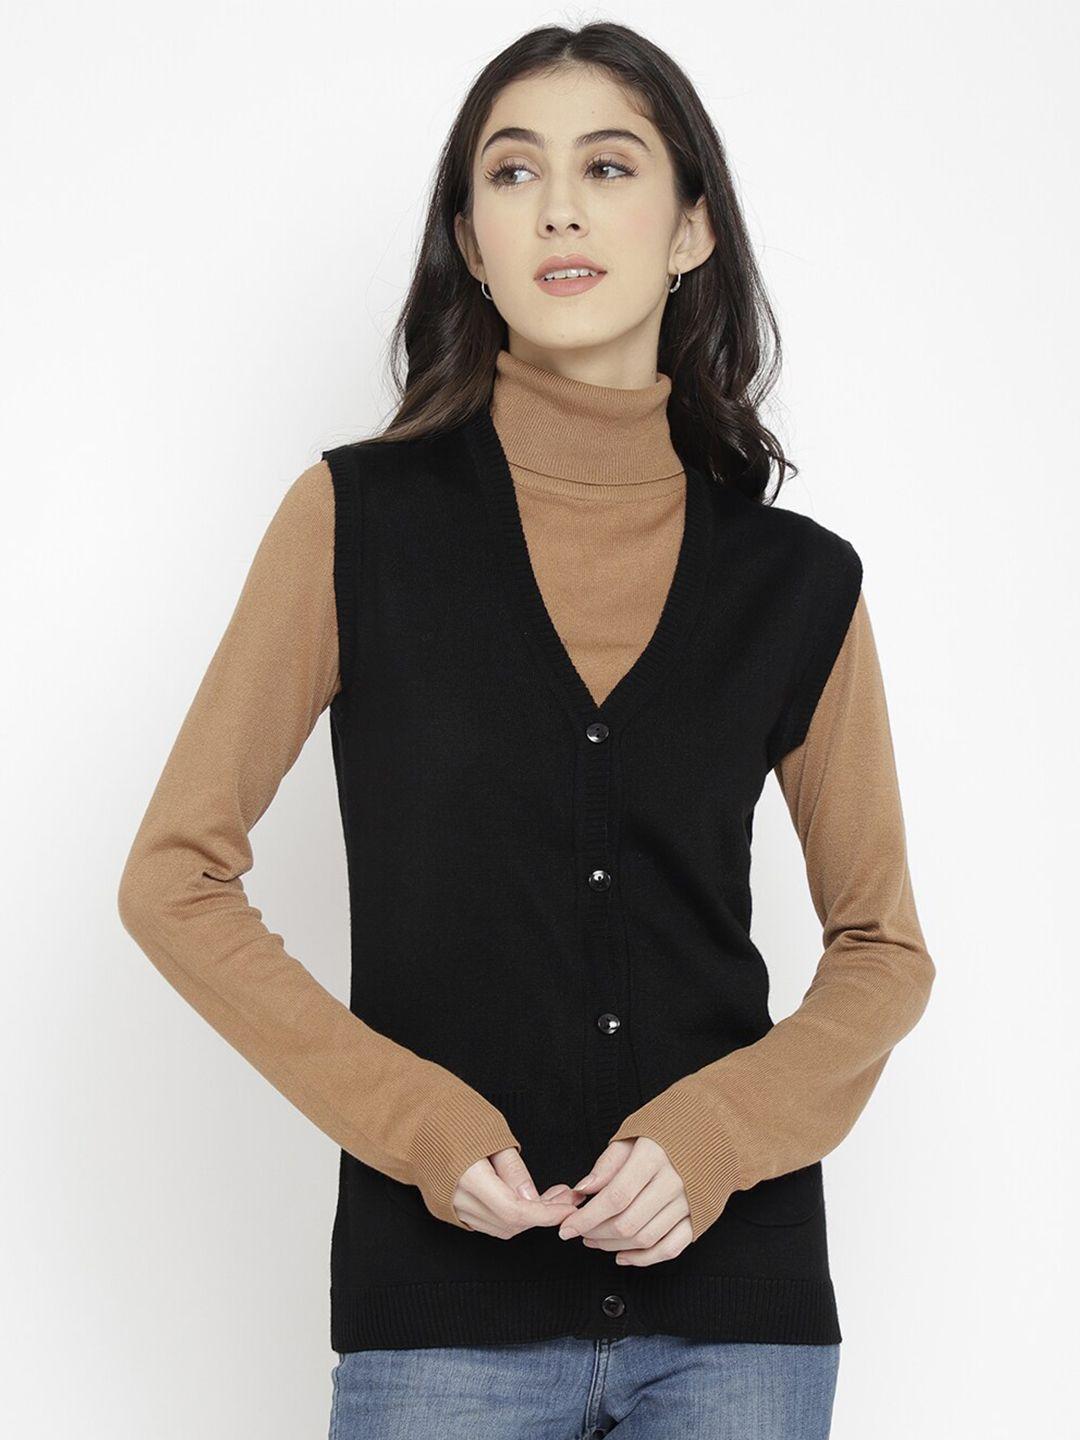 chkokko women black woolen solid sweater vest